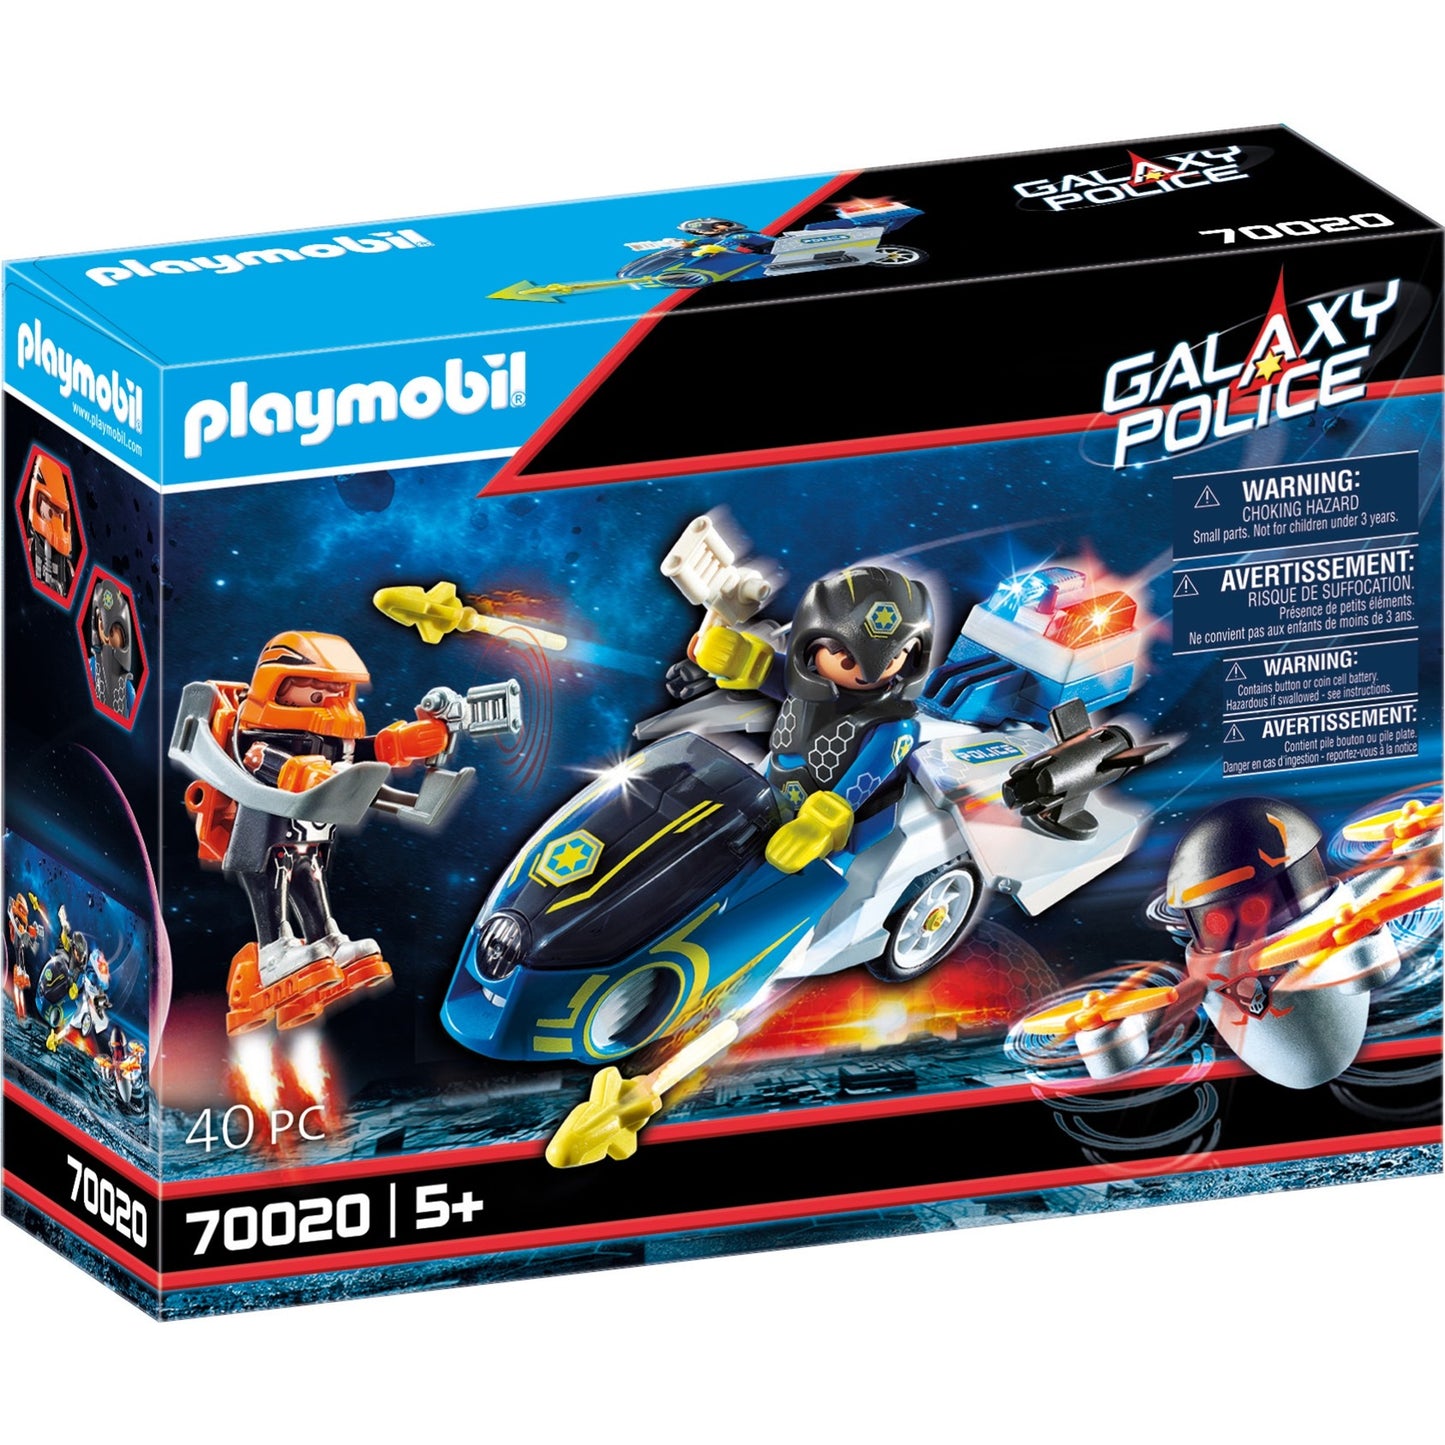 Playmobil Galaxy Police Galaxy Police Motor Bike